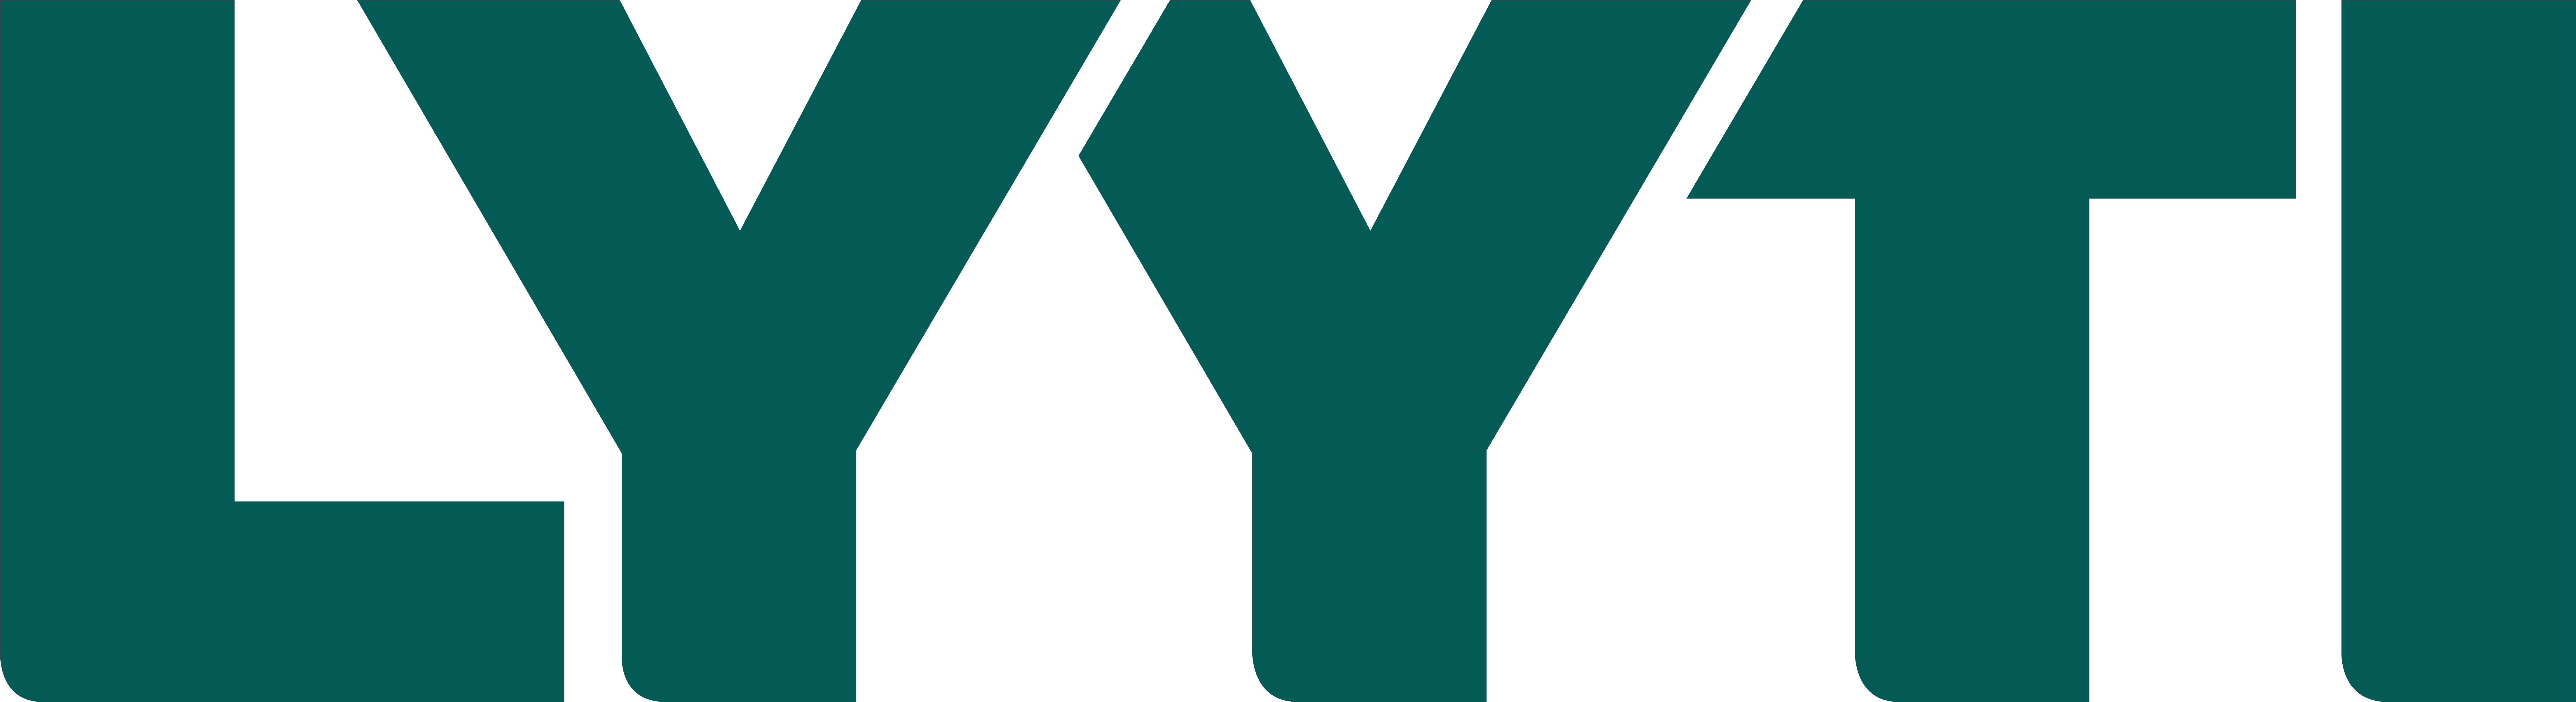 Lyyti-logo-balticsea-RGB (1)